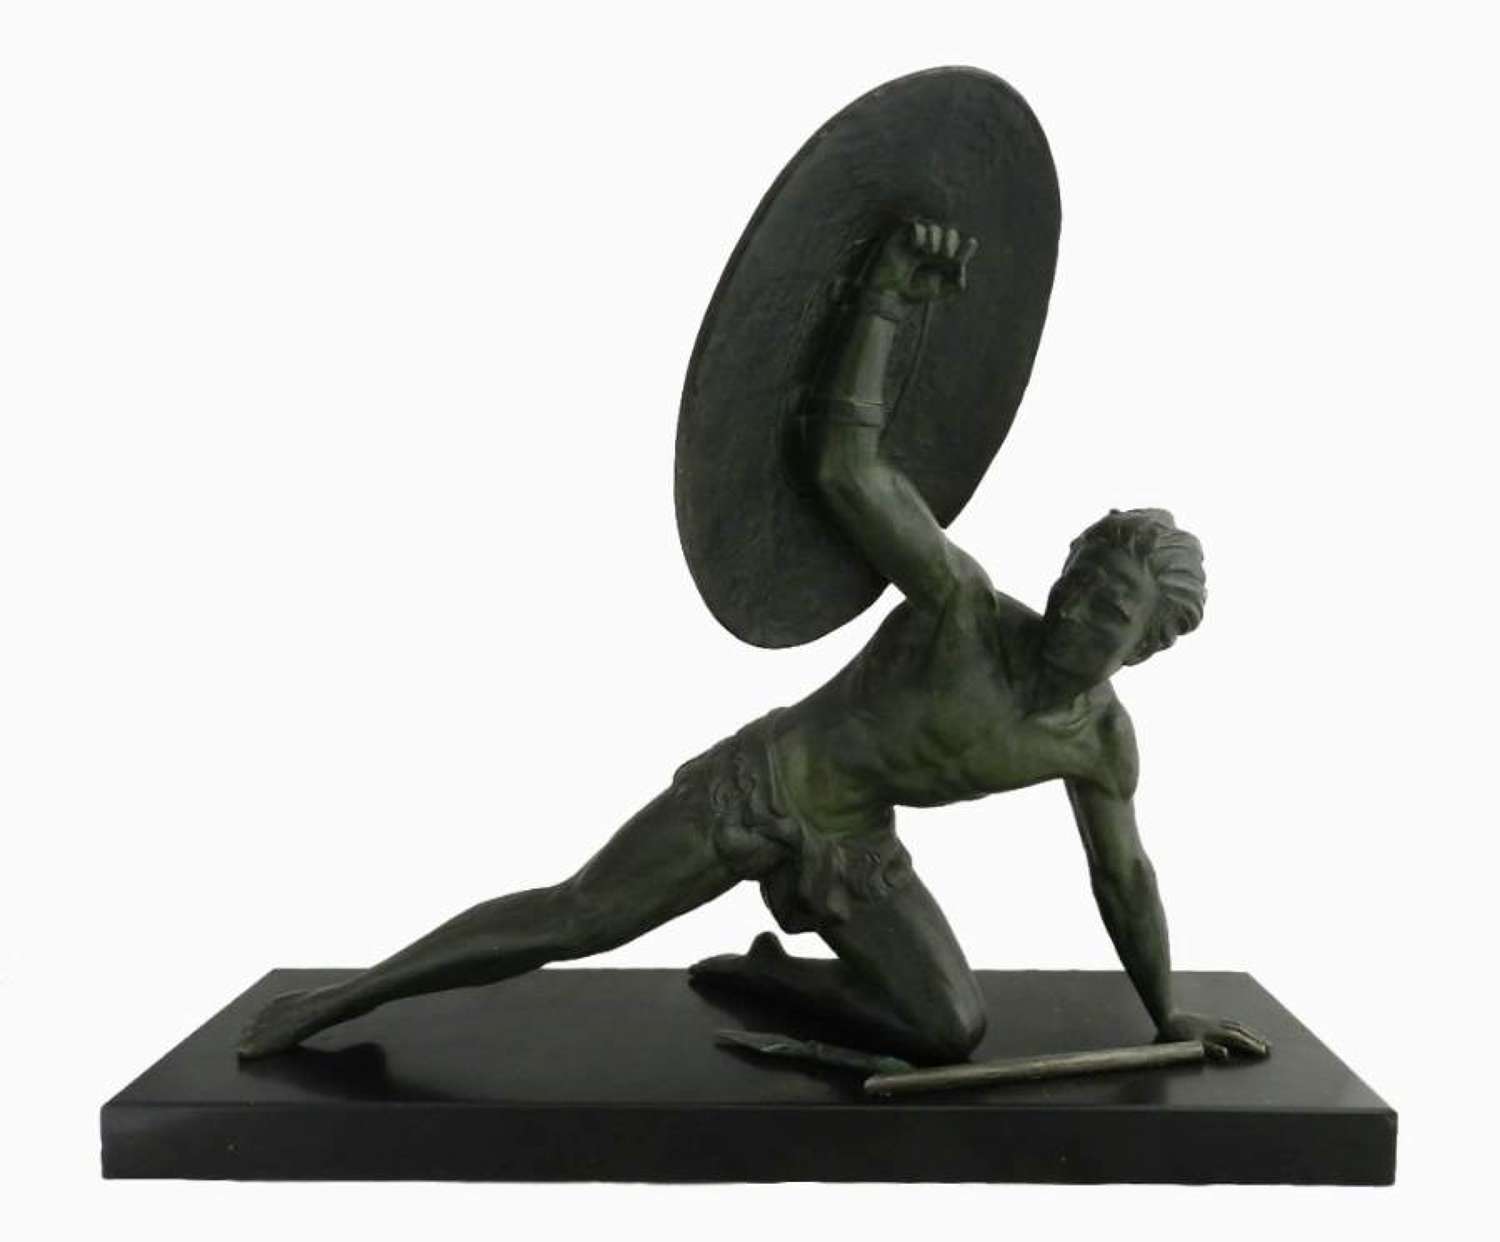 Original Art Deco Statue Gladiator by Jean de Roncourt signed French Bronze Verdigris patina metal 